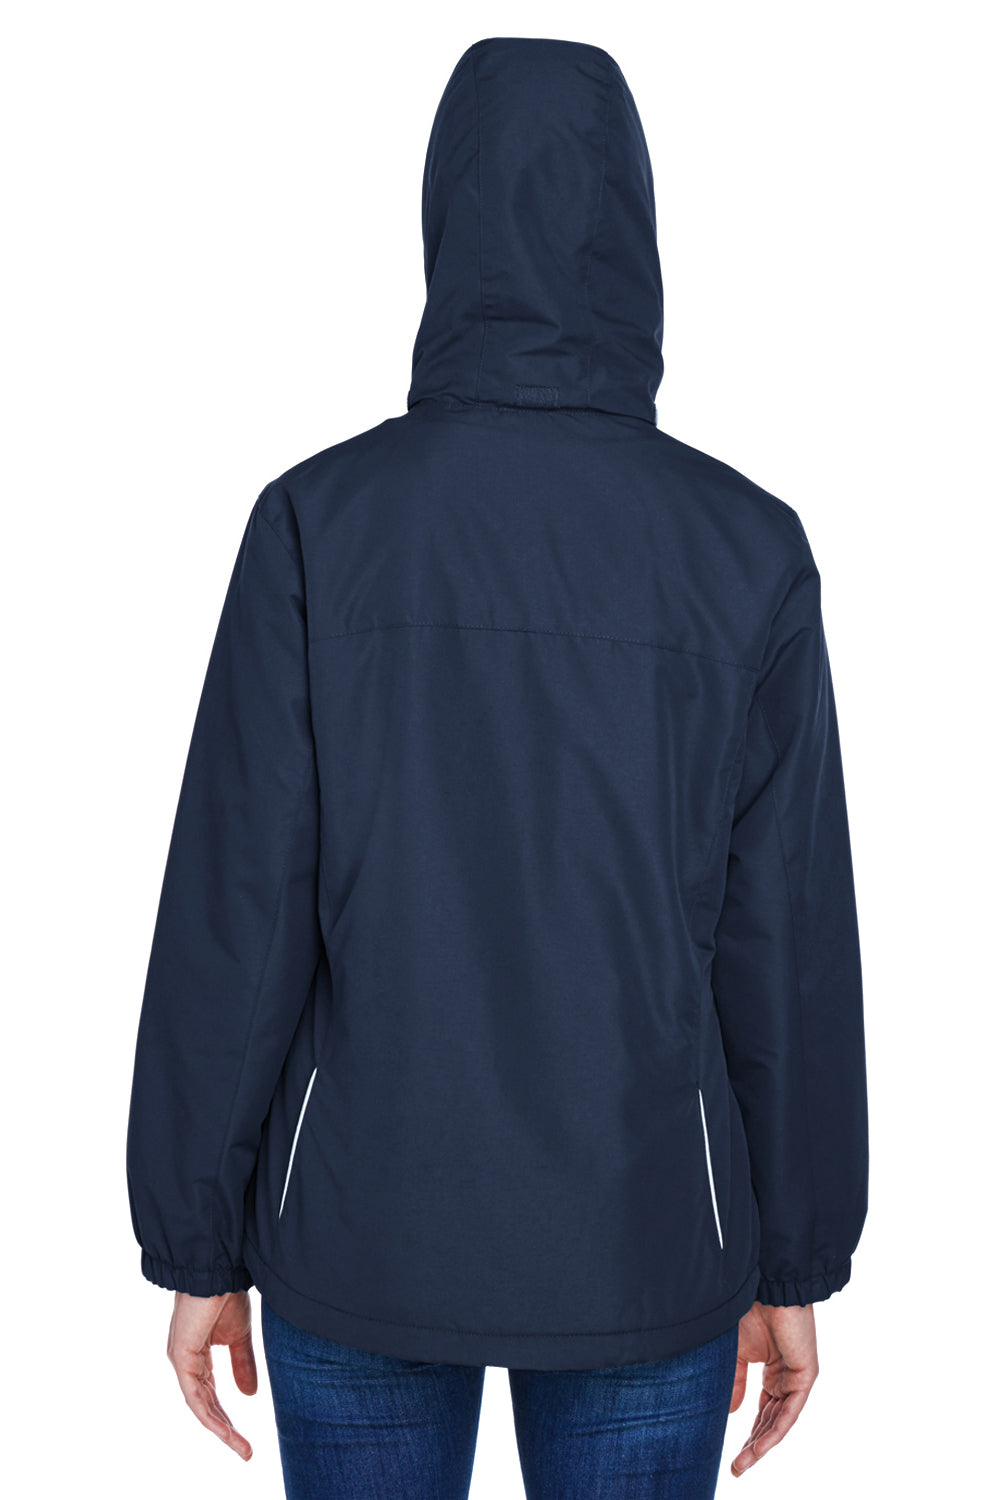 Core 365 78224 Womens Profile Water Resistant Full Zip Hooded Jacket Navy Blue Back